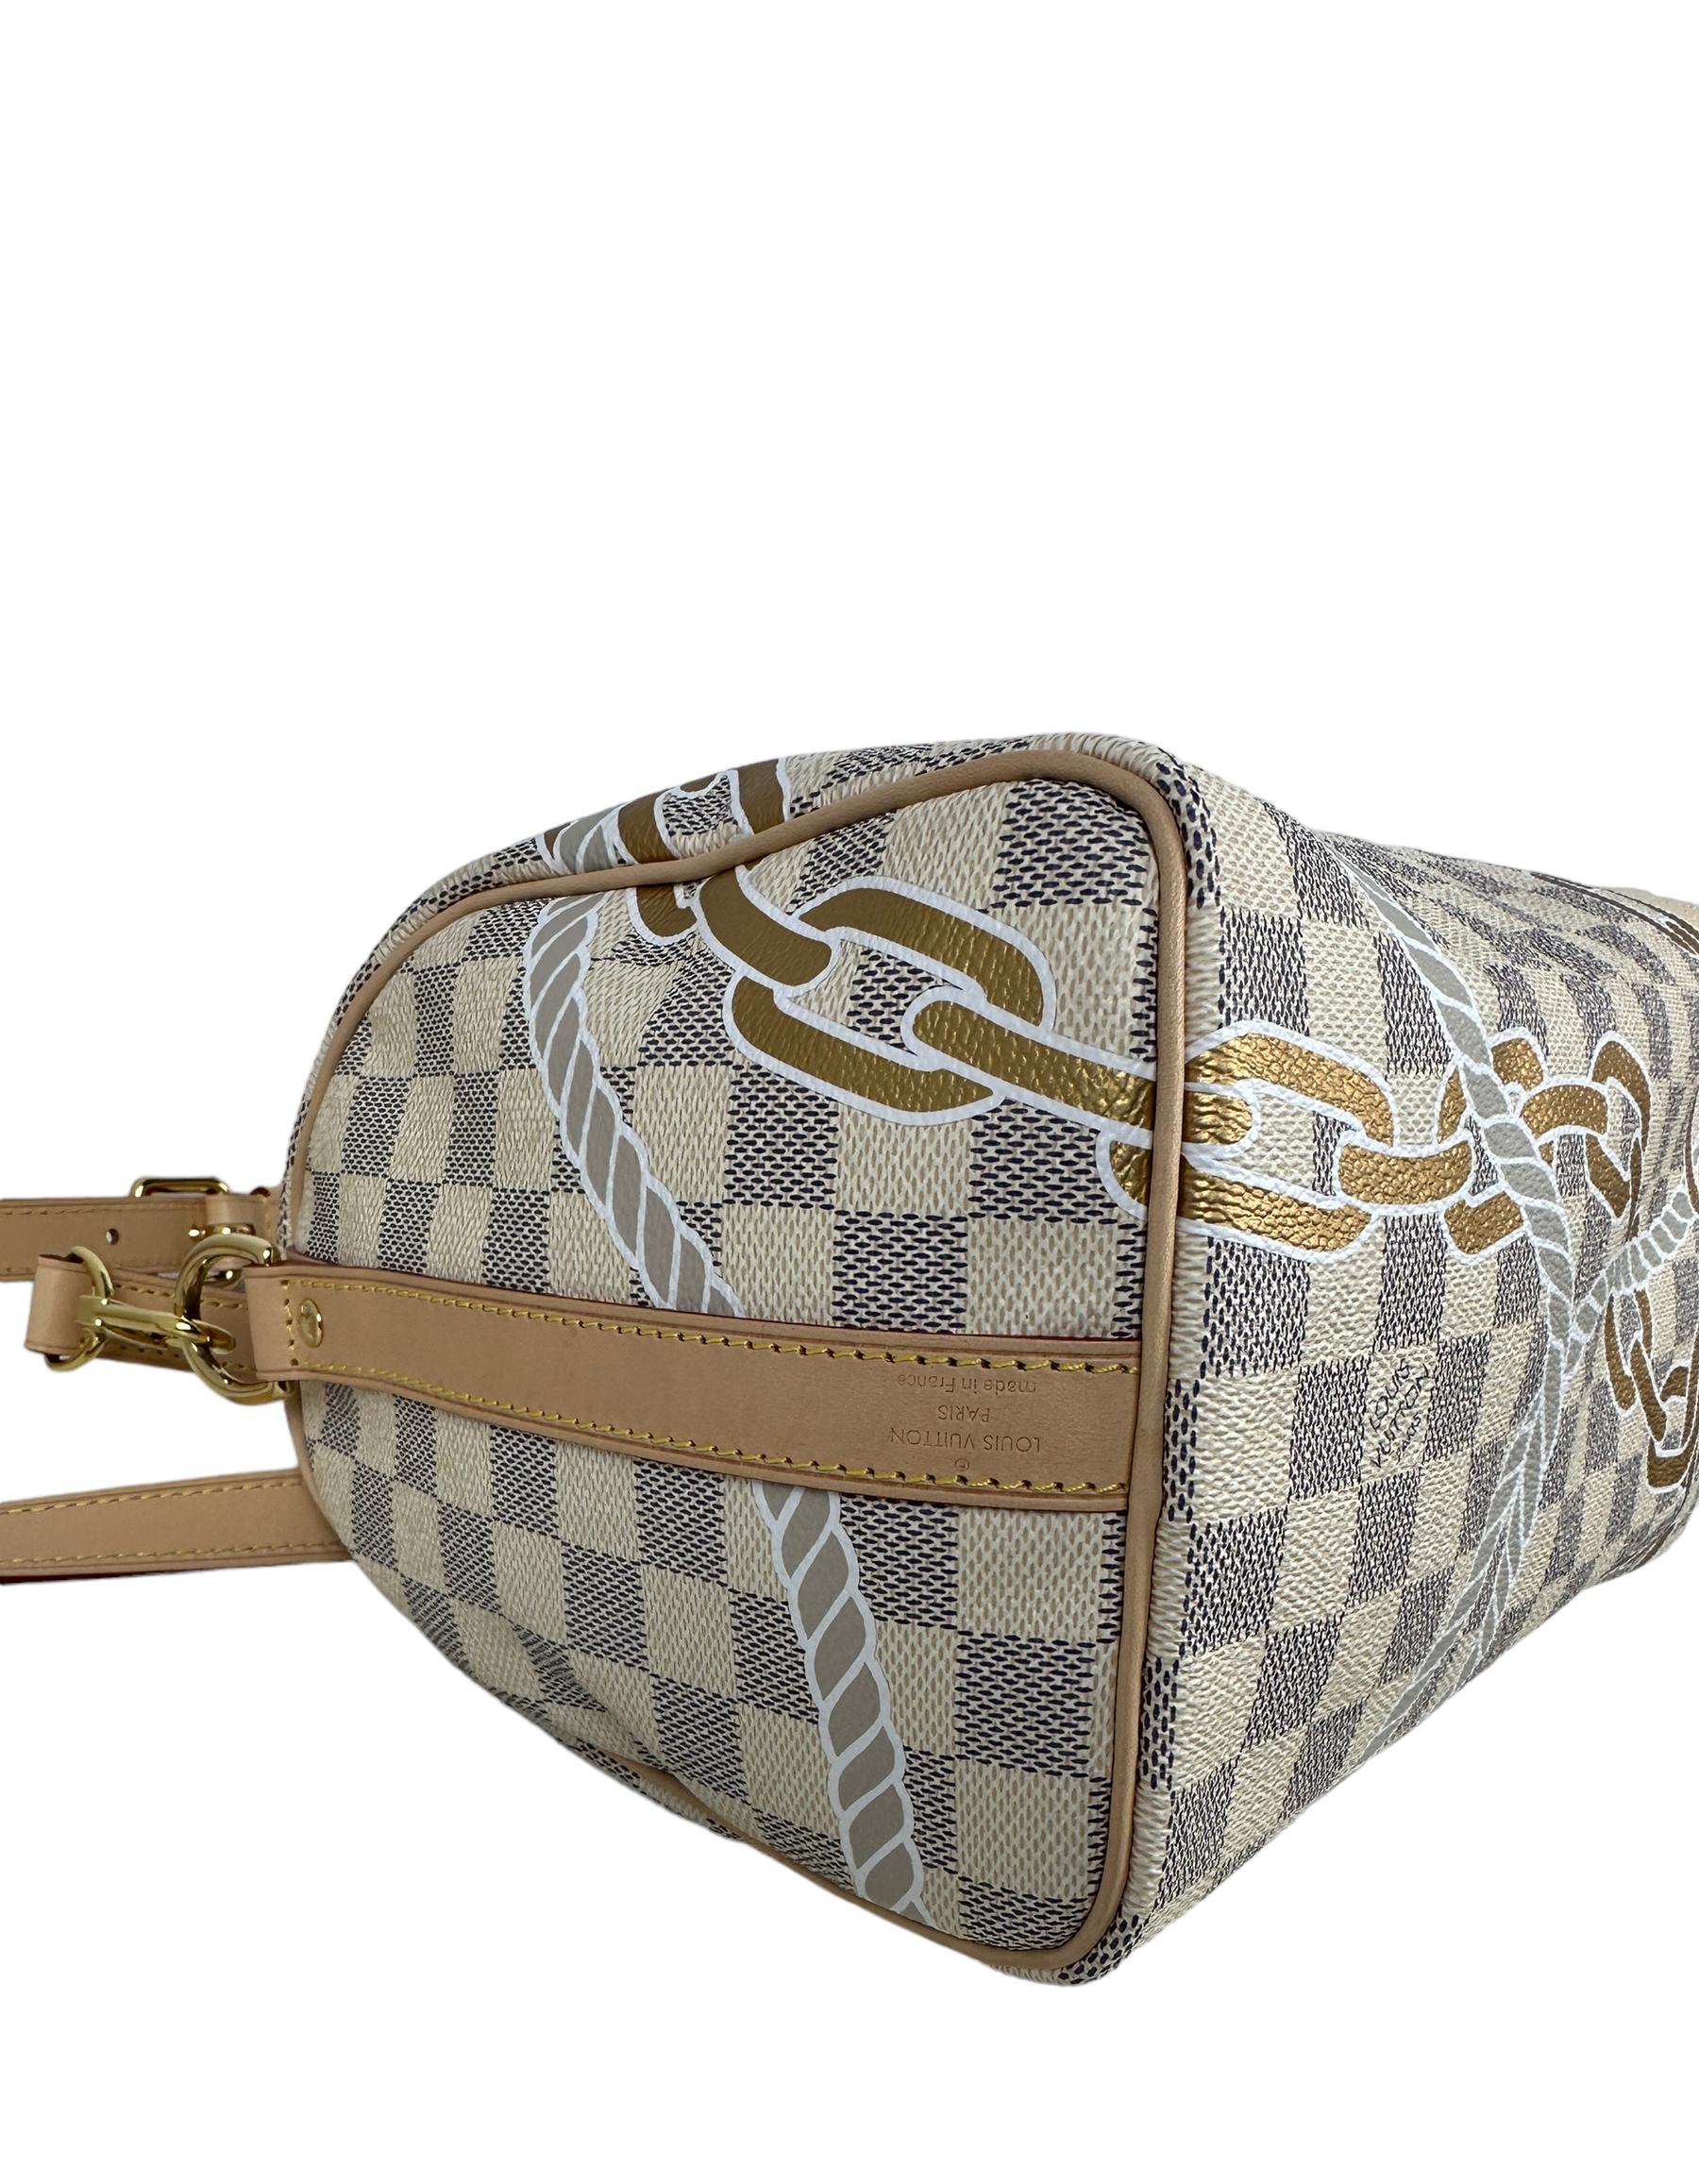 Louis Vuitton Limited Edition Nautical Damier Azur Speedy Bandouliere 25 Bag For Sale 1